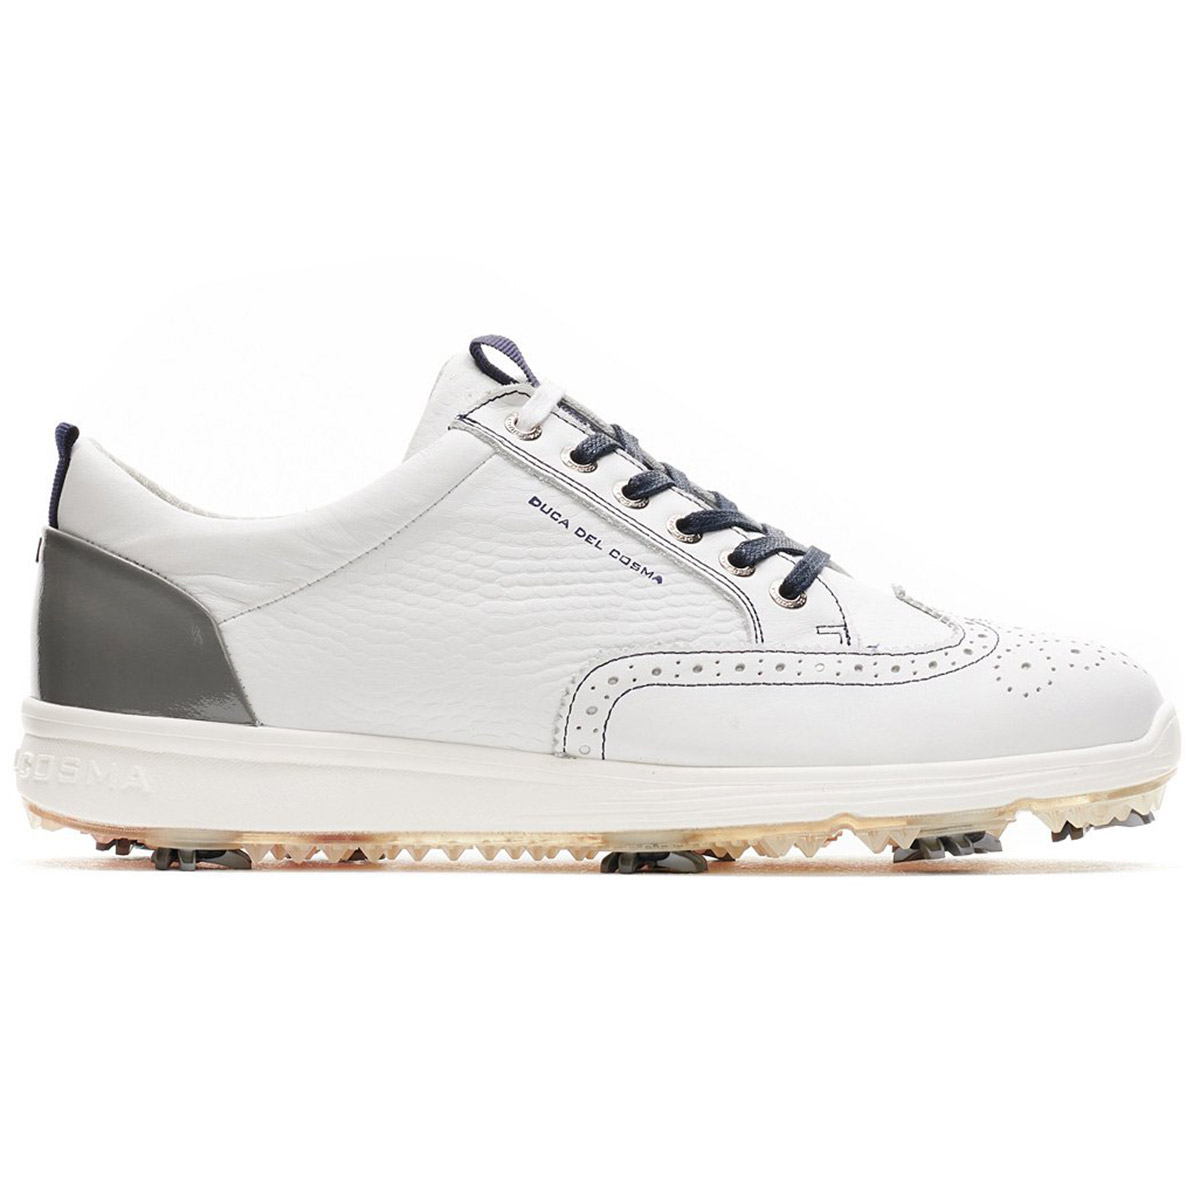 Duca Del Cosma Men's Heritage Waterproof Spiked Golf Shoes from ...